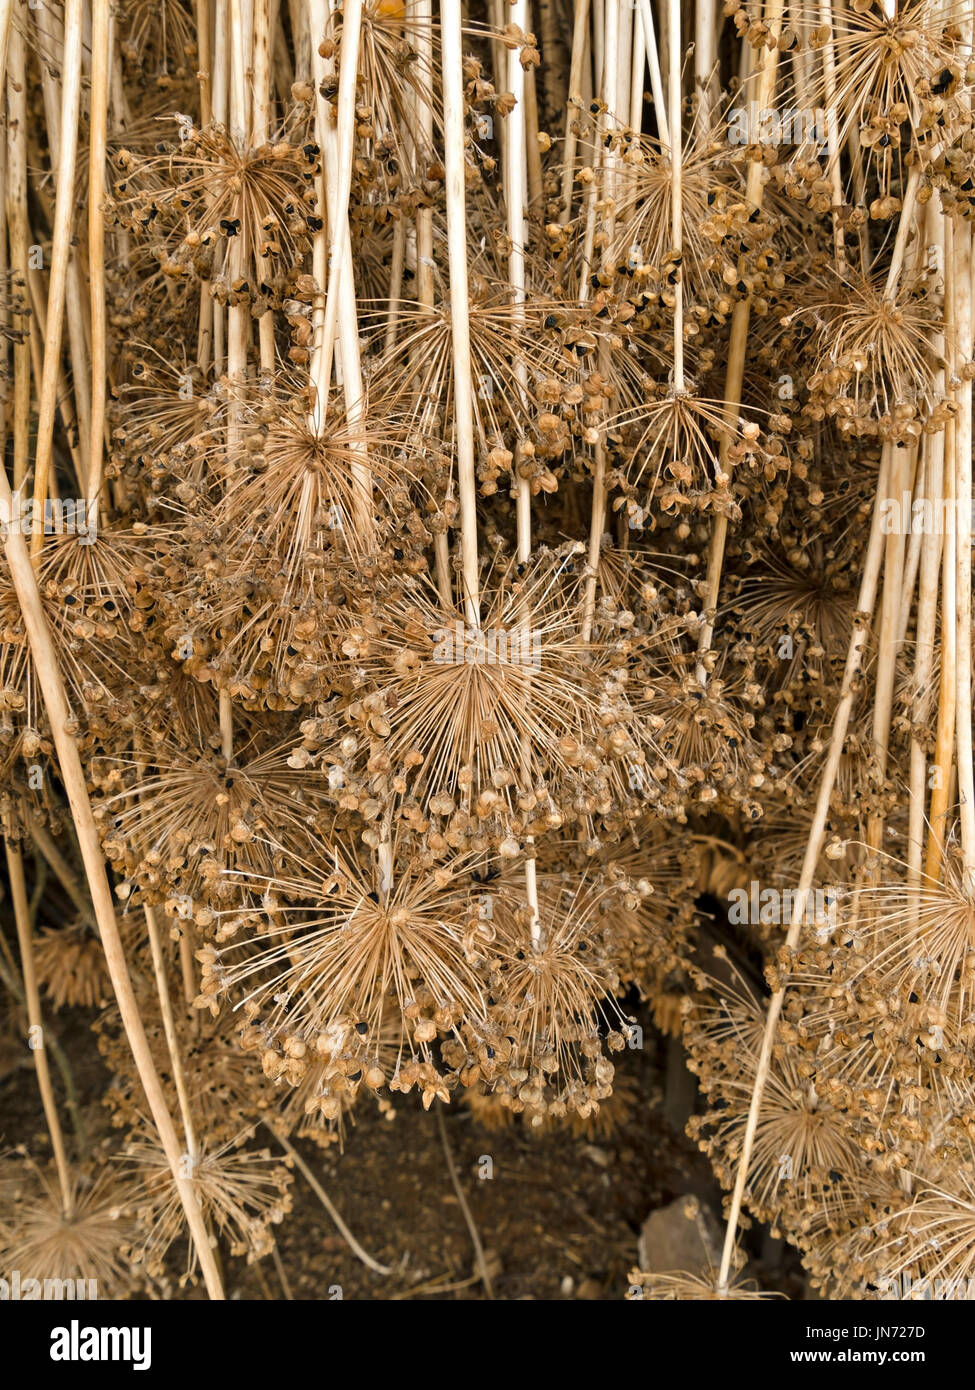 Allium Samen Köpfe hängen kopfüber zum Trocknen Stockfotografie - Alamy